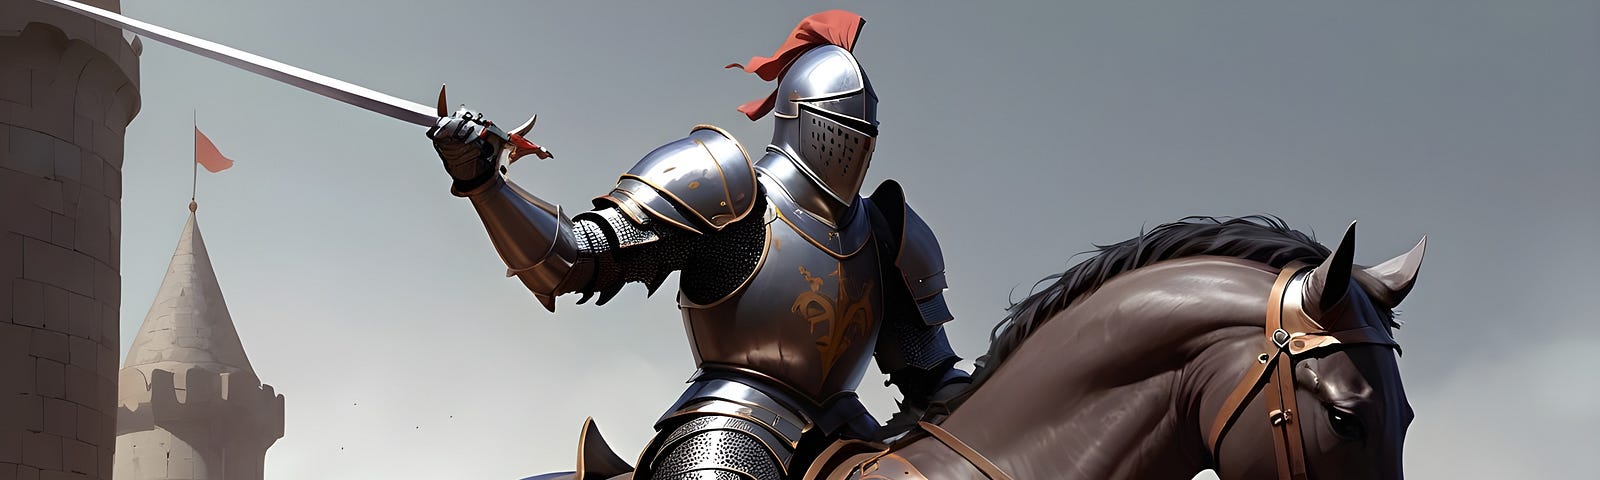 A medieval knight